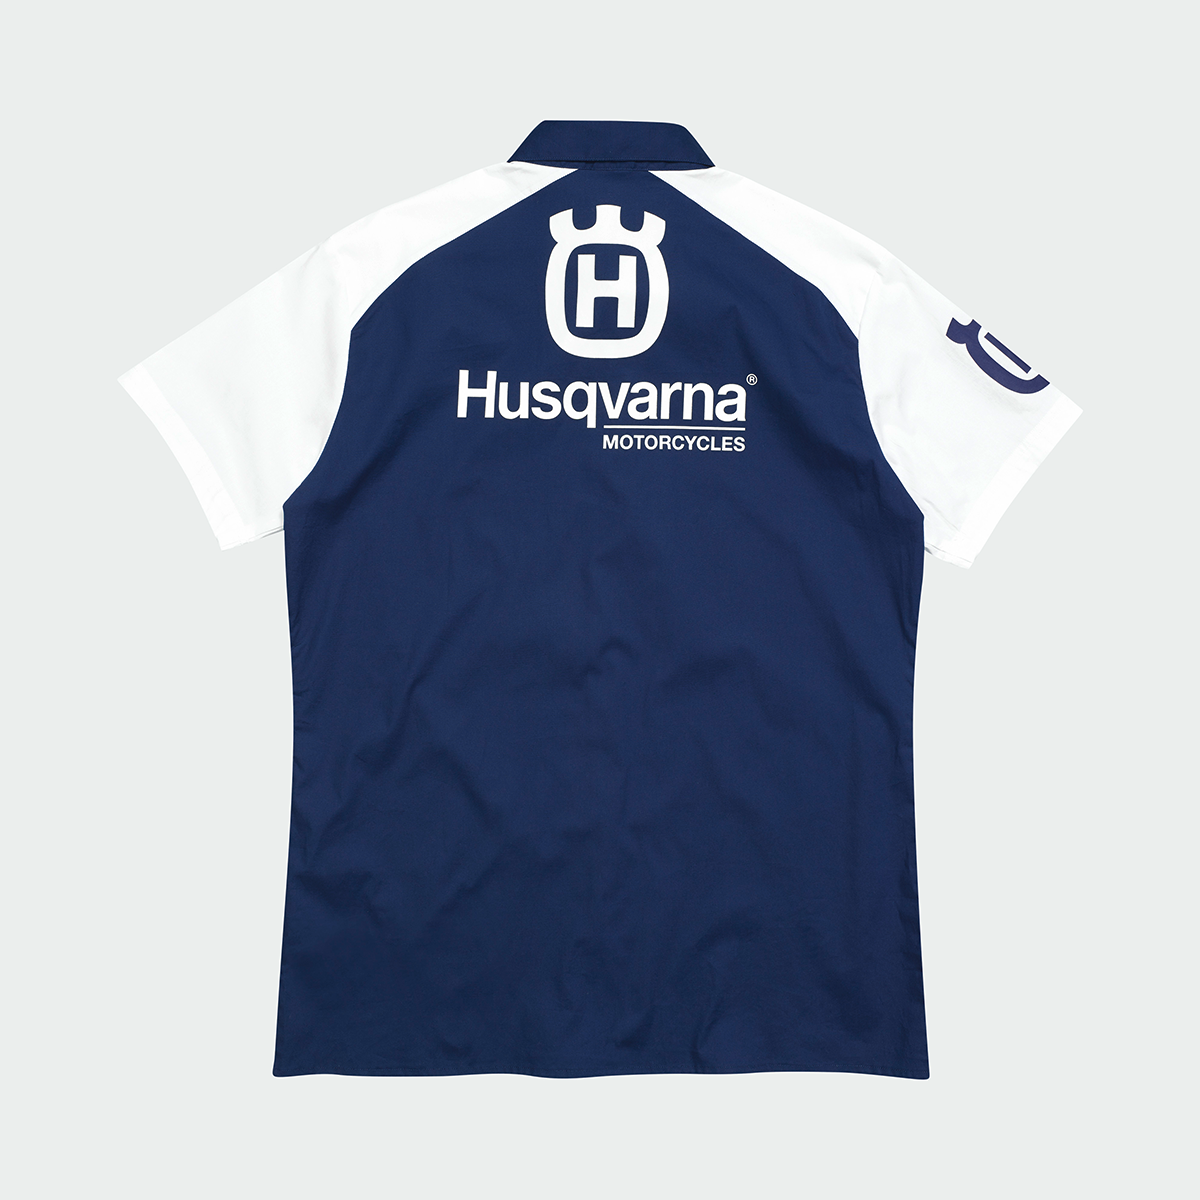 Husqvarna Replica Team Shirt